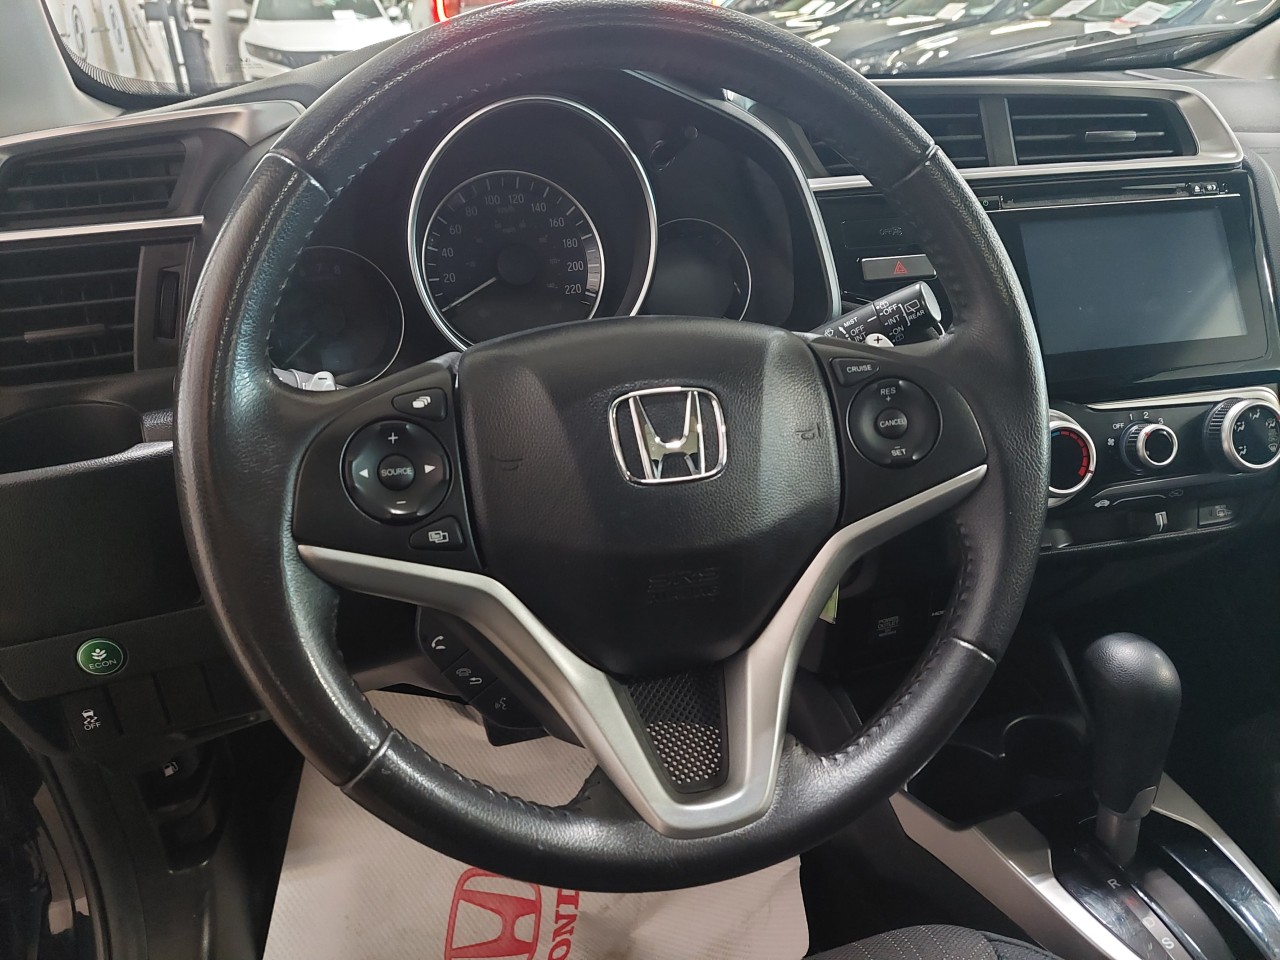 2017 Honda Fit EX Main Image